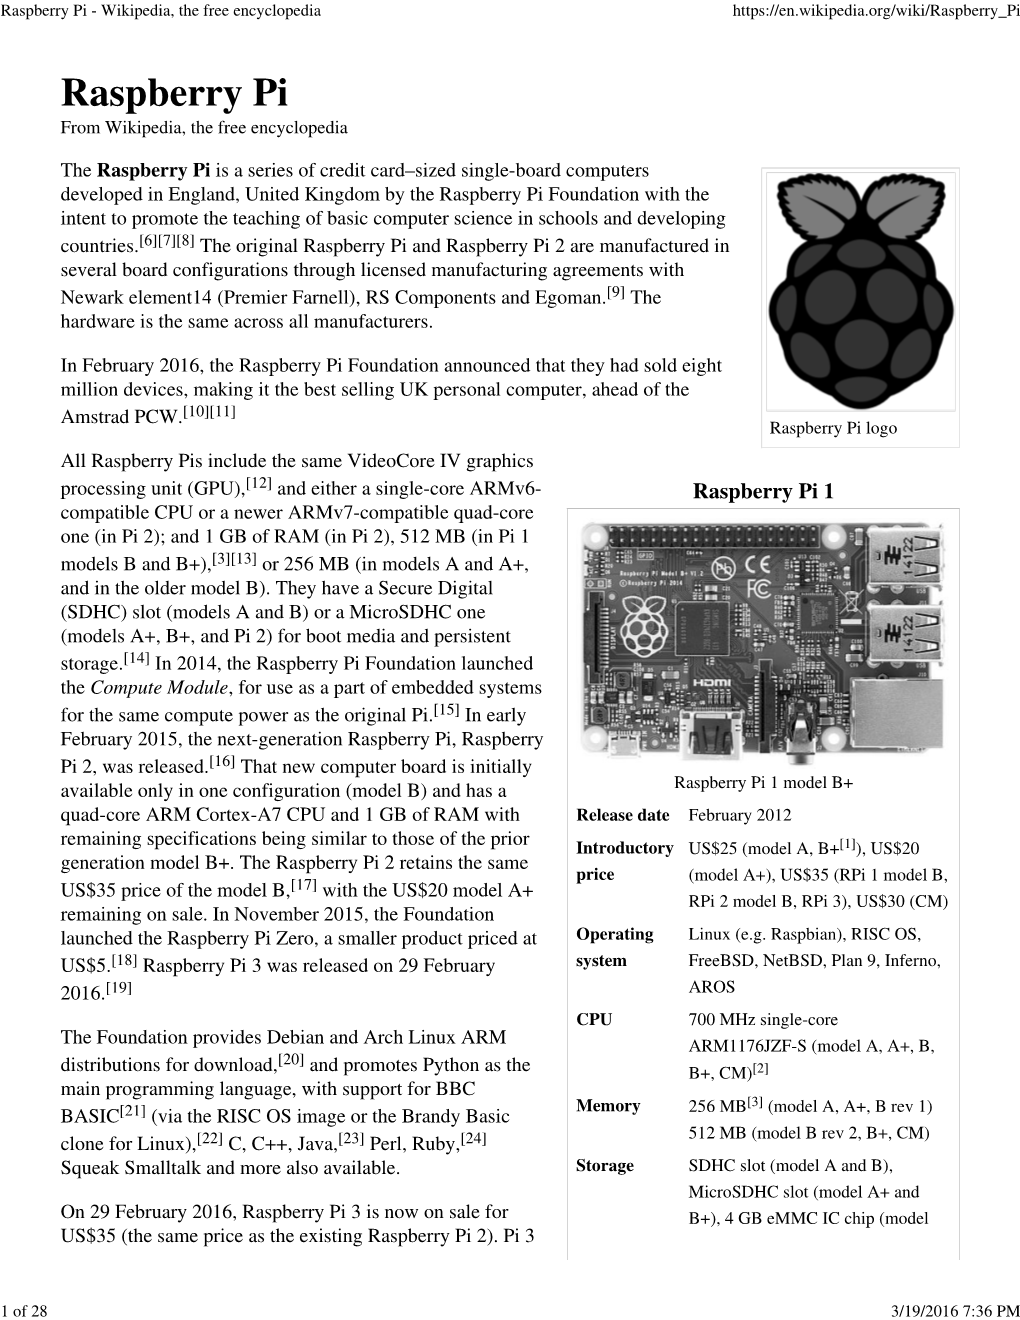 Raspberry Pi - Wikipedia, the Free Encyclopedia